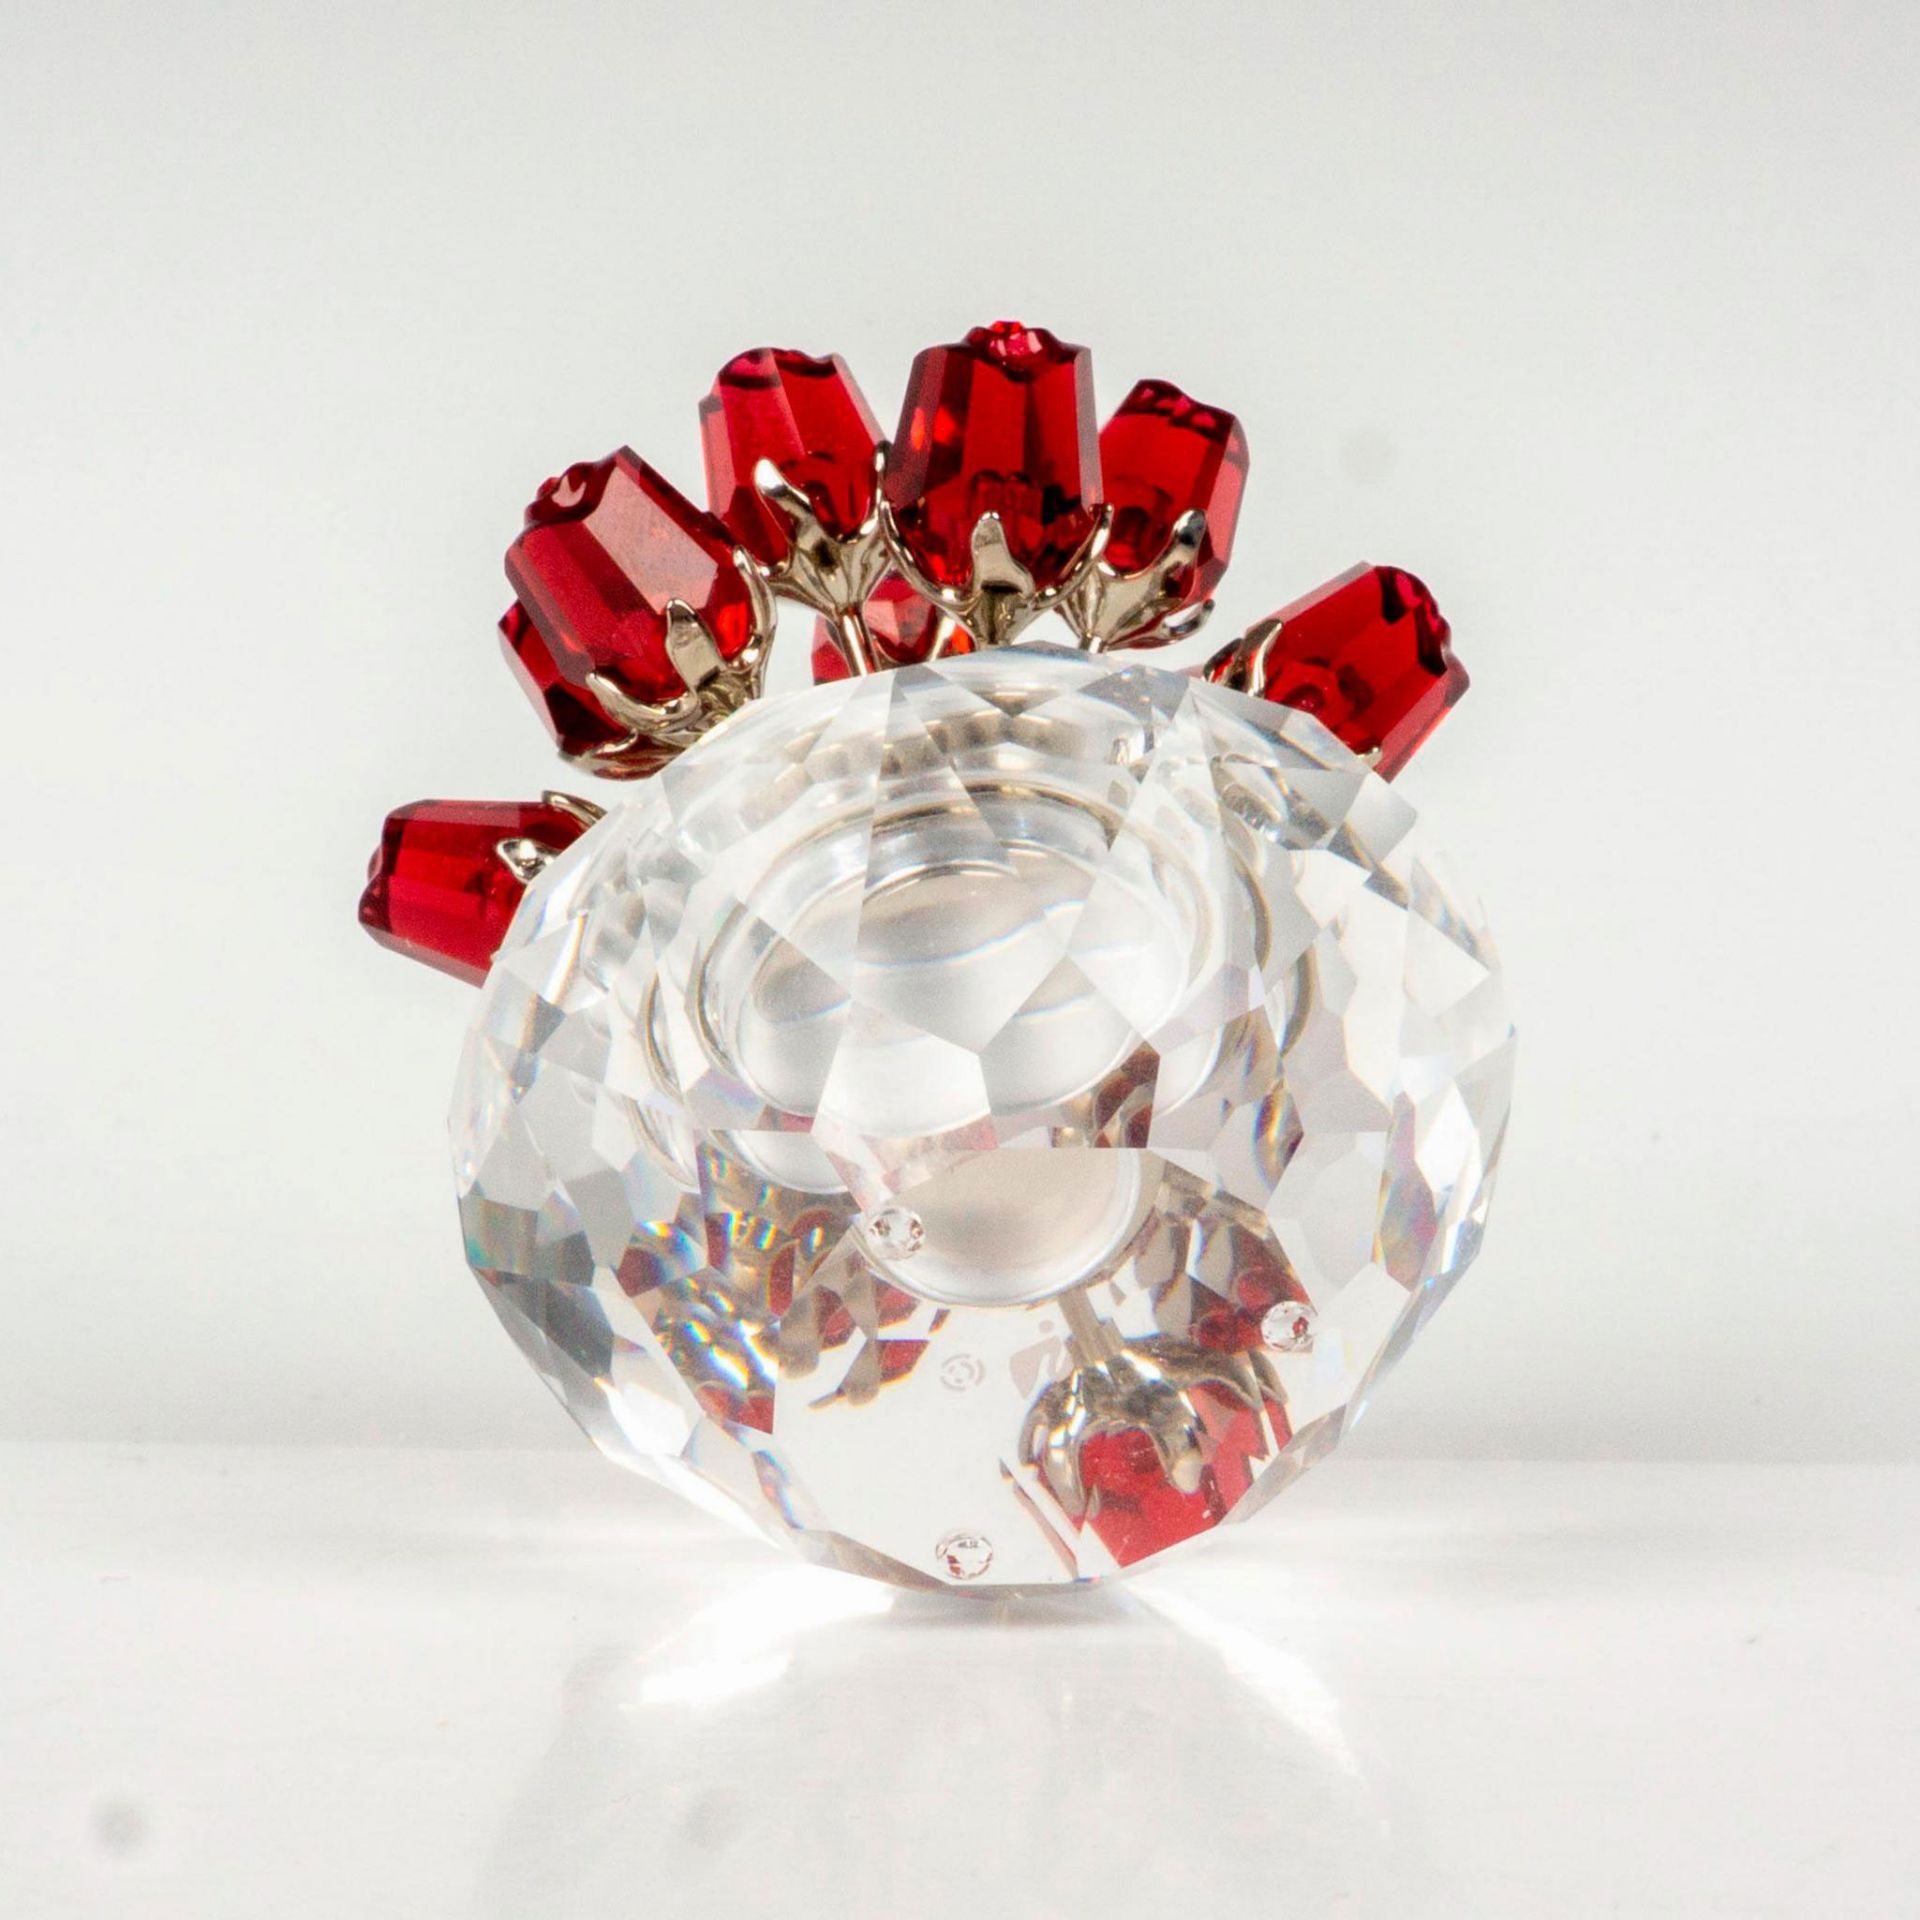 Swarovski Crystal Figurine, Vase of Red Roses - Image 3 of 3